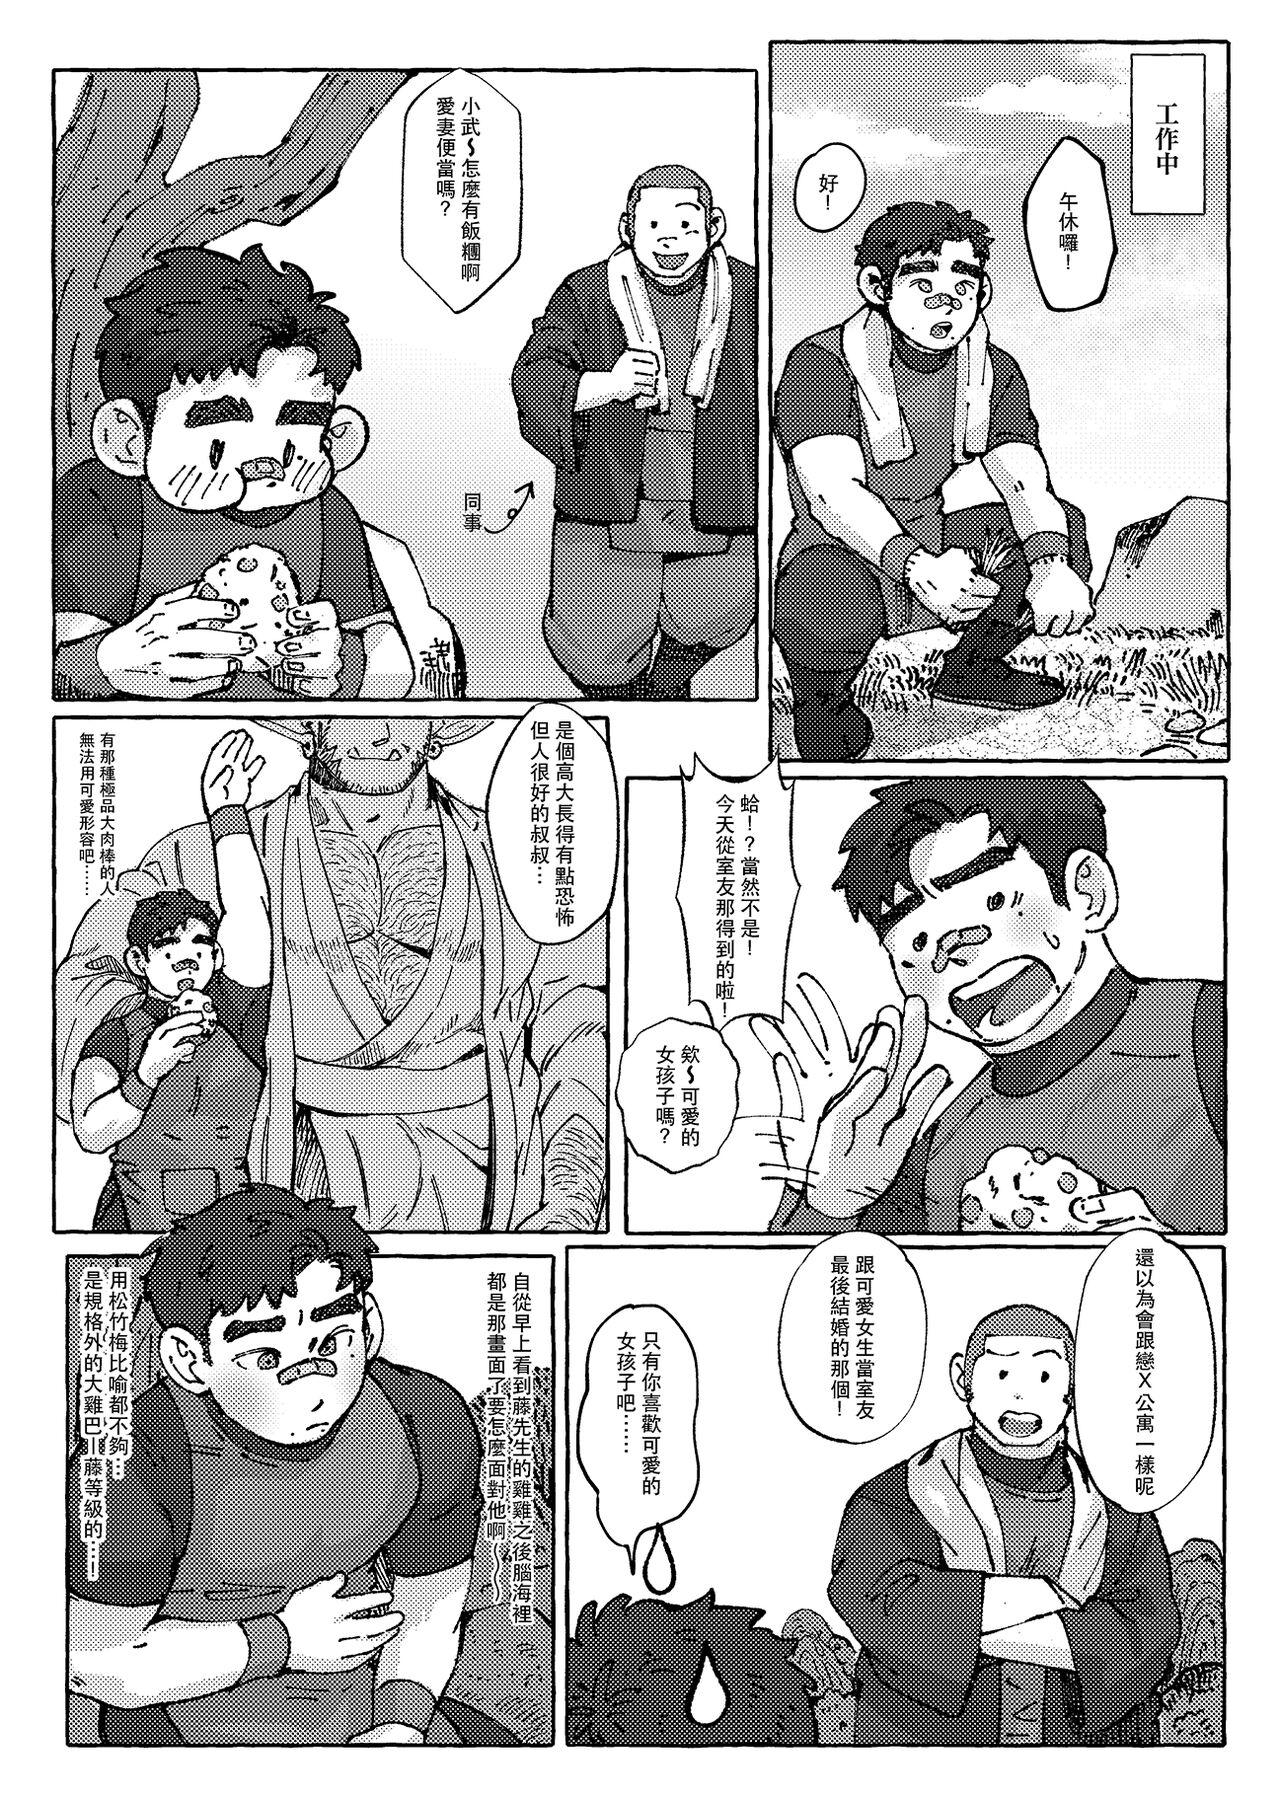 Cbt Shanshan Kuo - The Fuji! Full Book (Chinese Version) 松竹梅與藤｜繁中全書 Gay Broken - Page 8